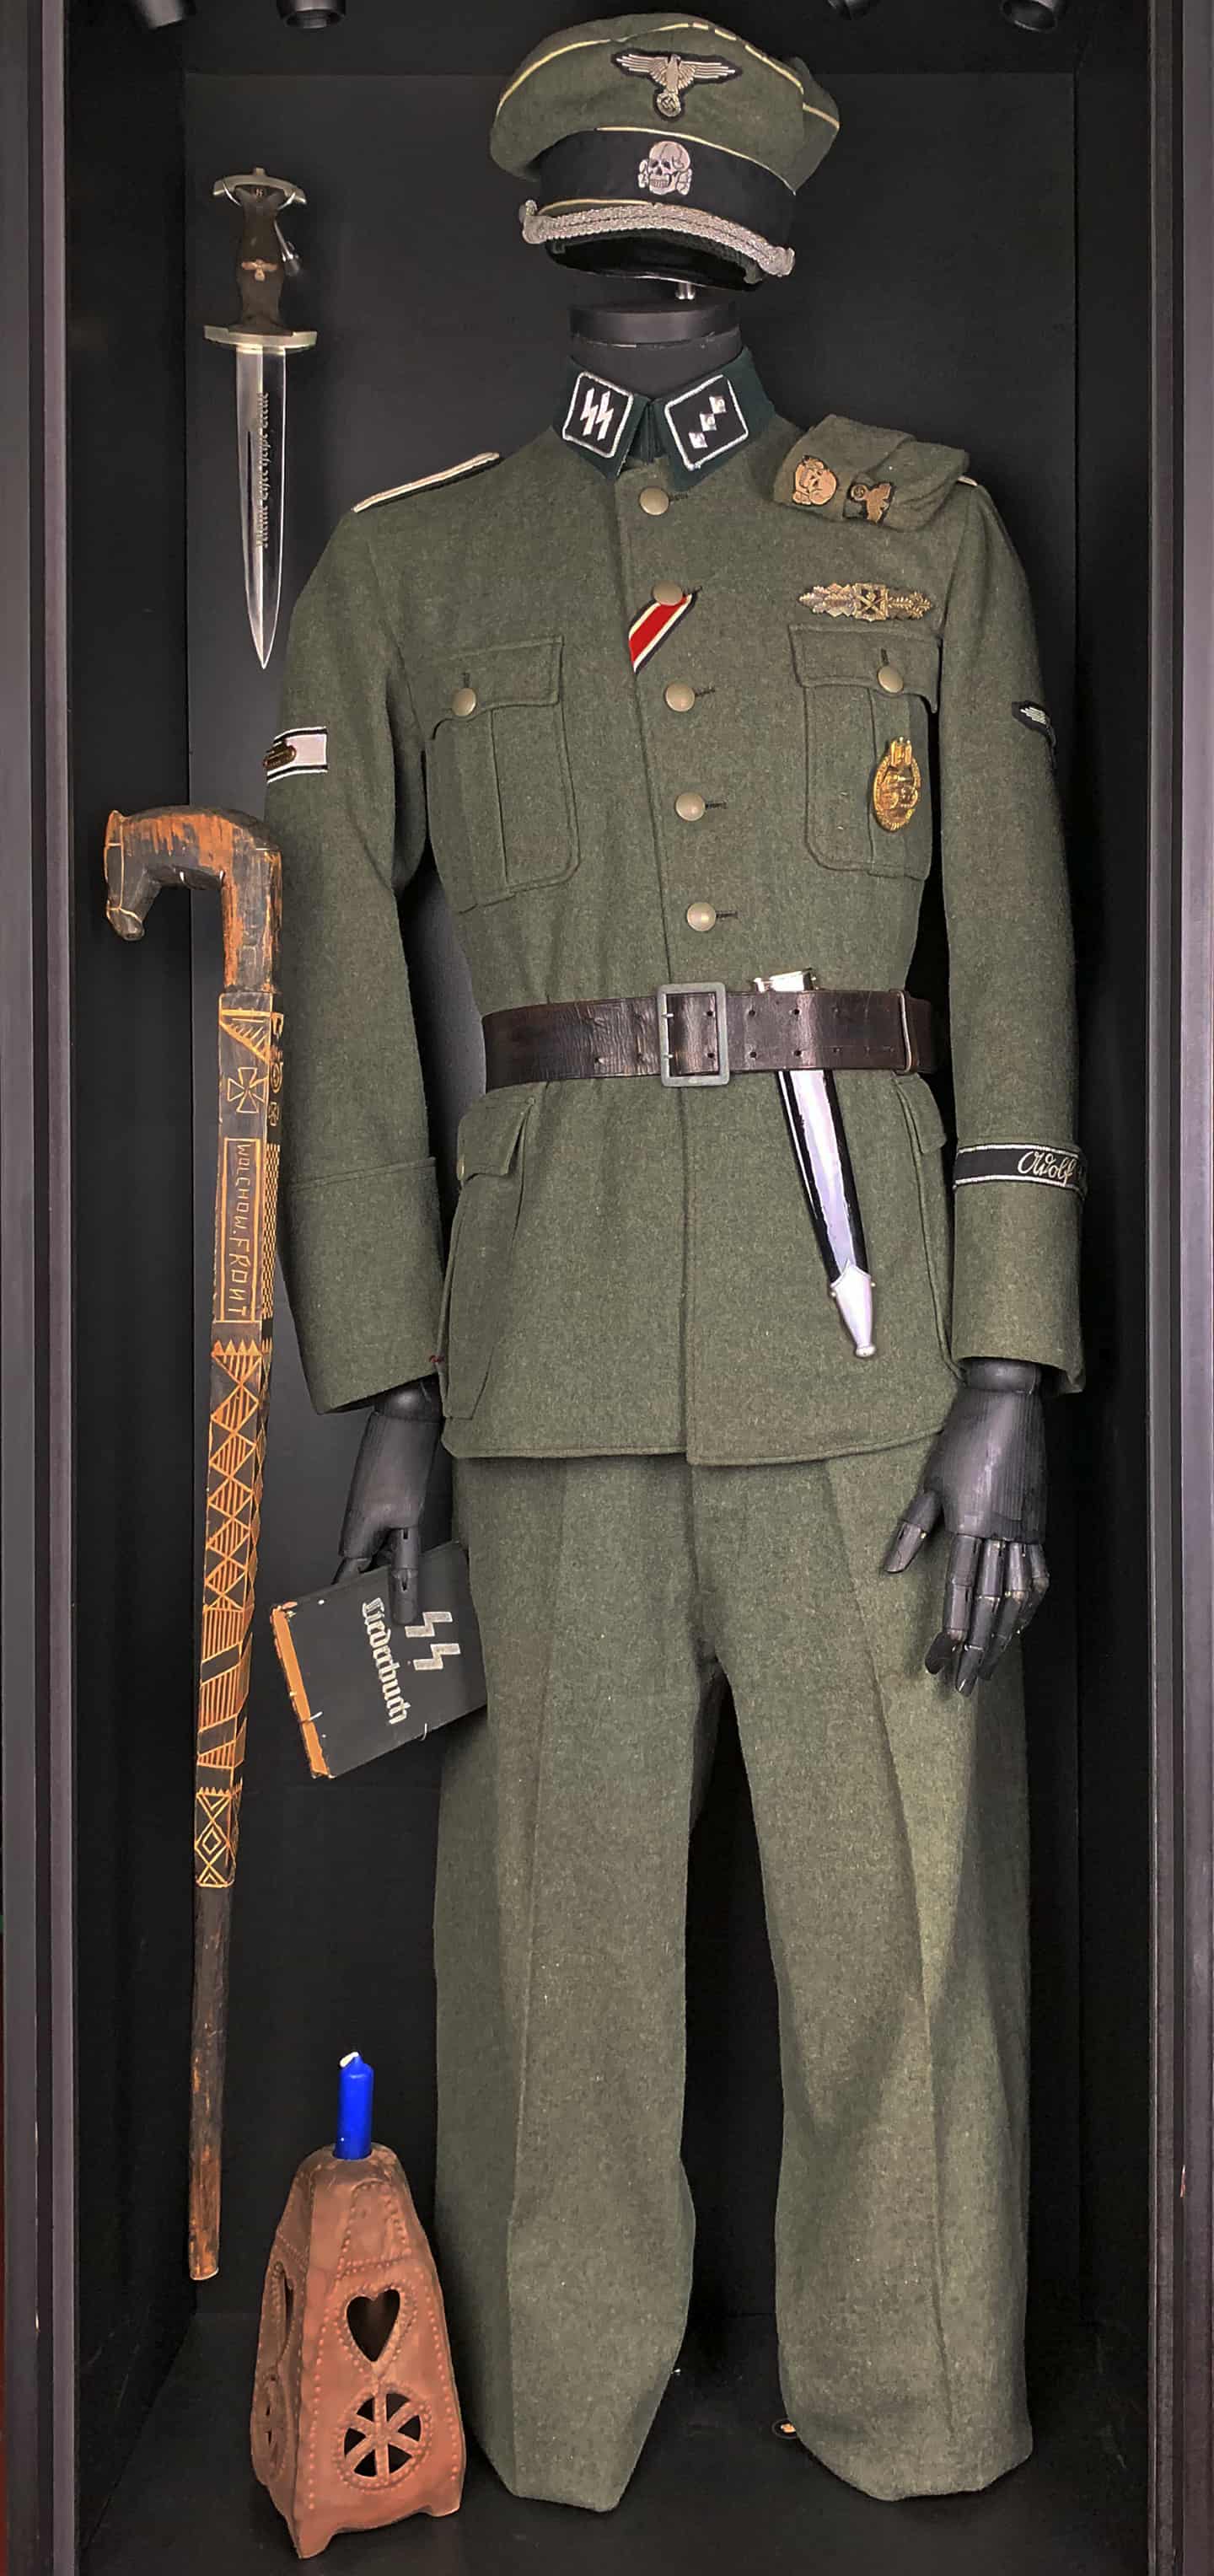 Tysk Uniform